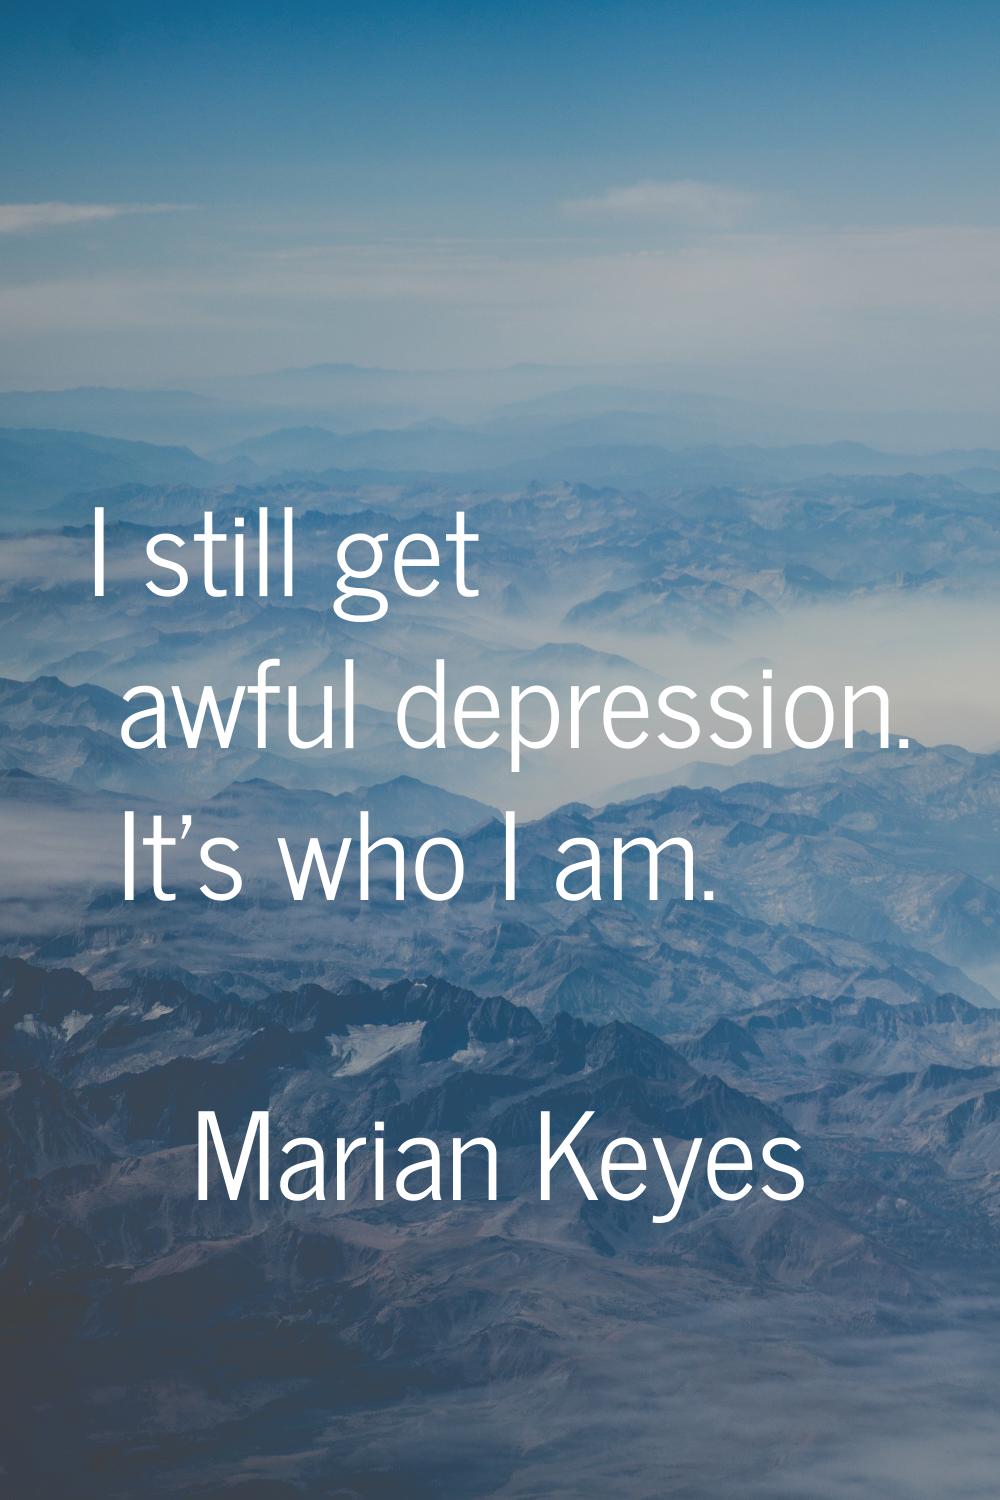 I still get awful depression. It's who I am.